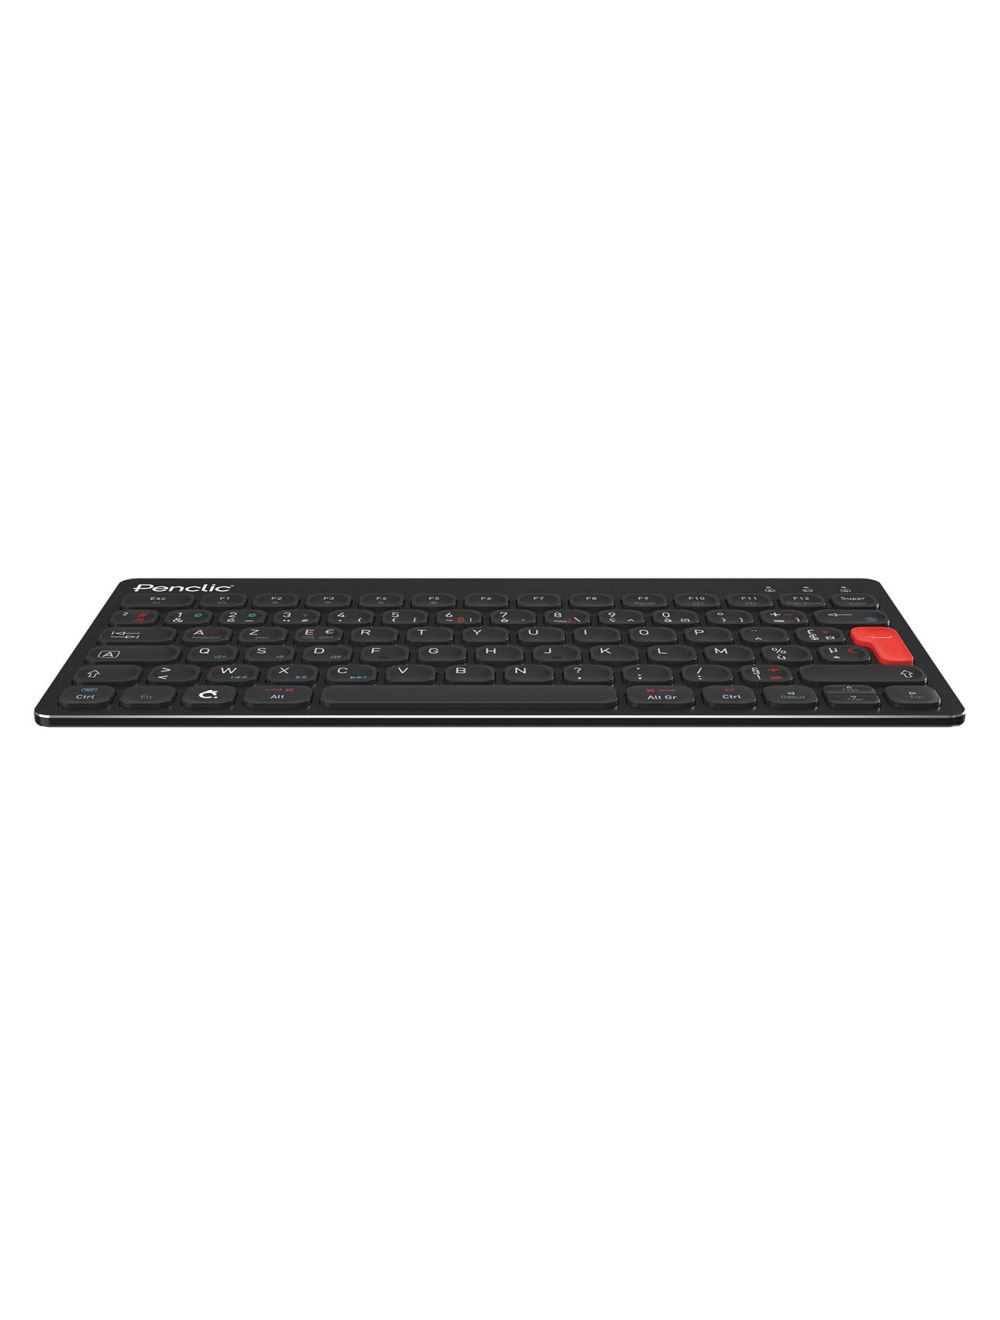 Penclic Compact Keyboard KB3 Wireless Bluetooth Azerty Black